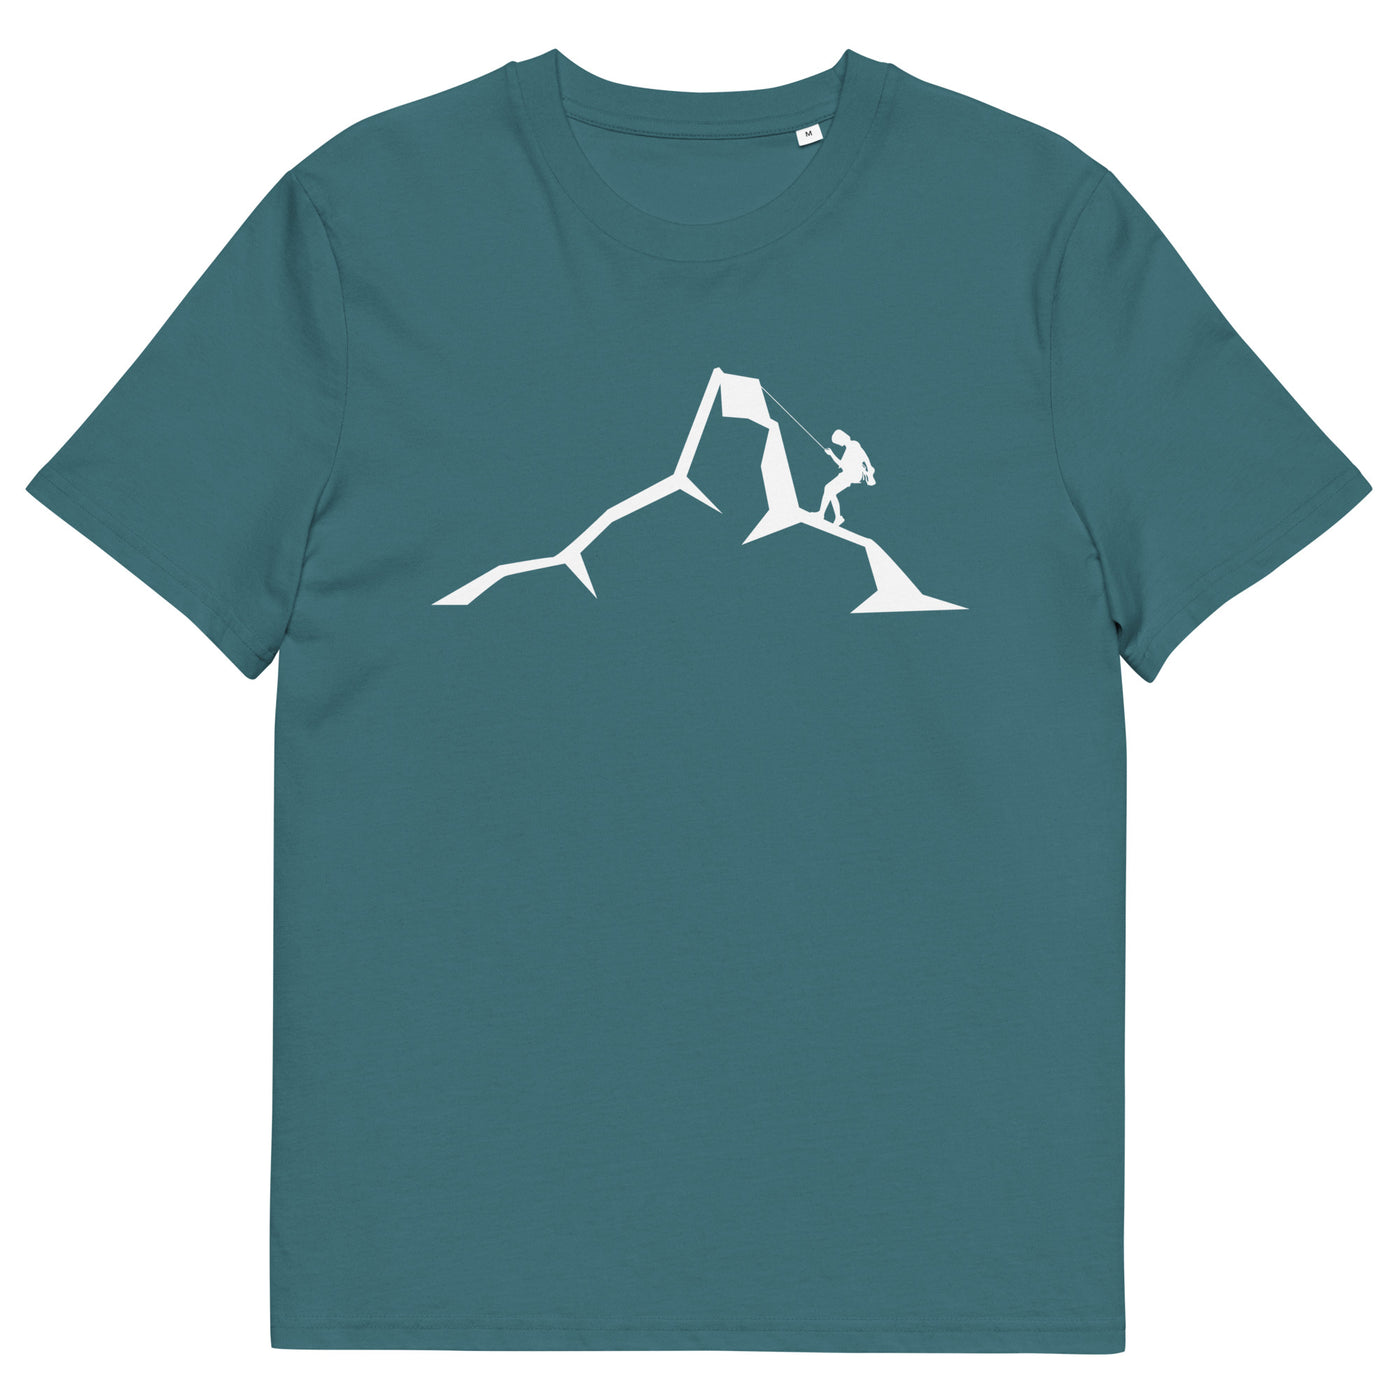 Berge - Klettern - Herren Premium Organic T-Shirt klettern xxx yyy zzz Stargazer